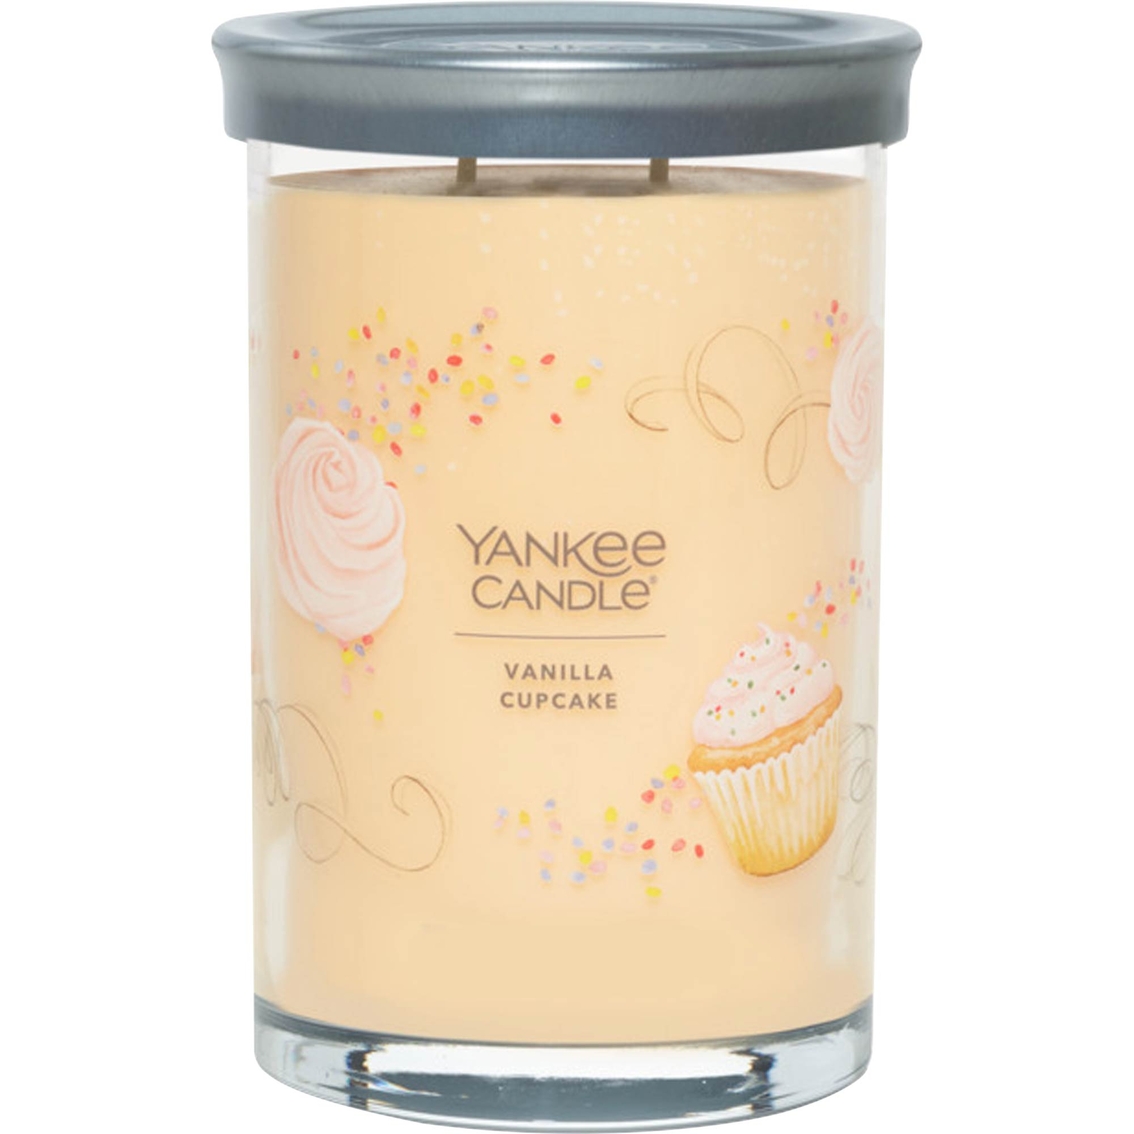 Yankee Candle Vanilla Cupcake Signature Large Tumbler Candle